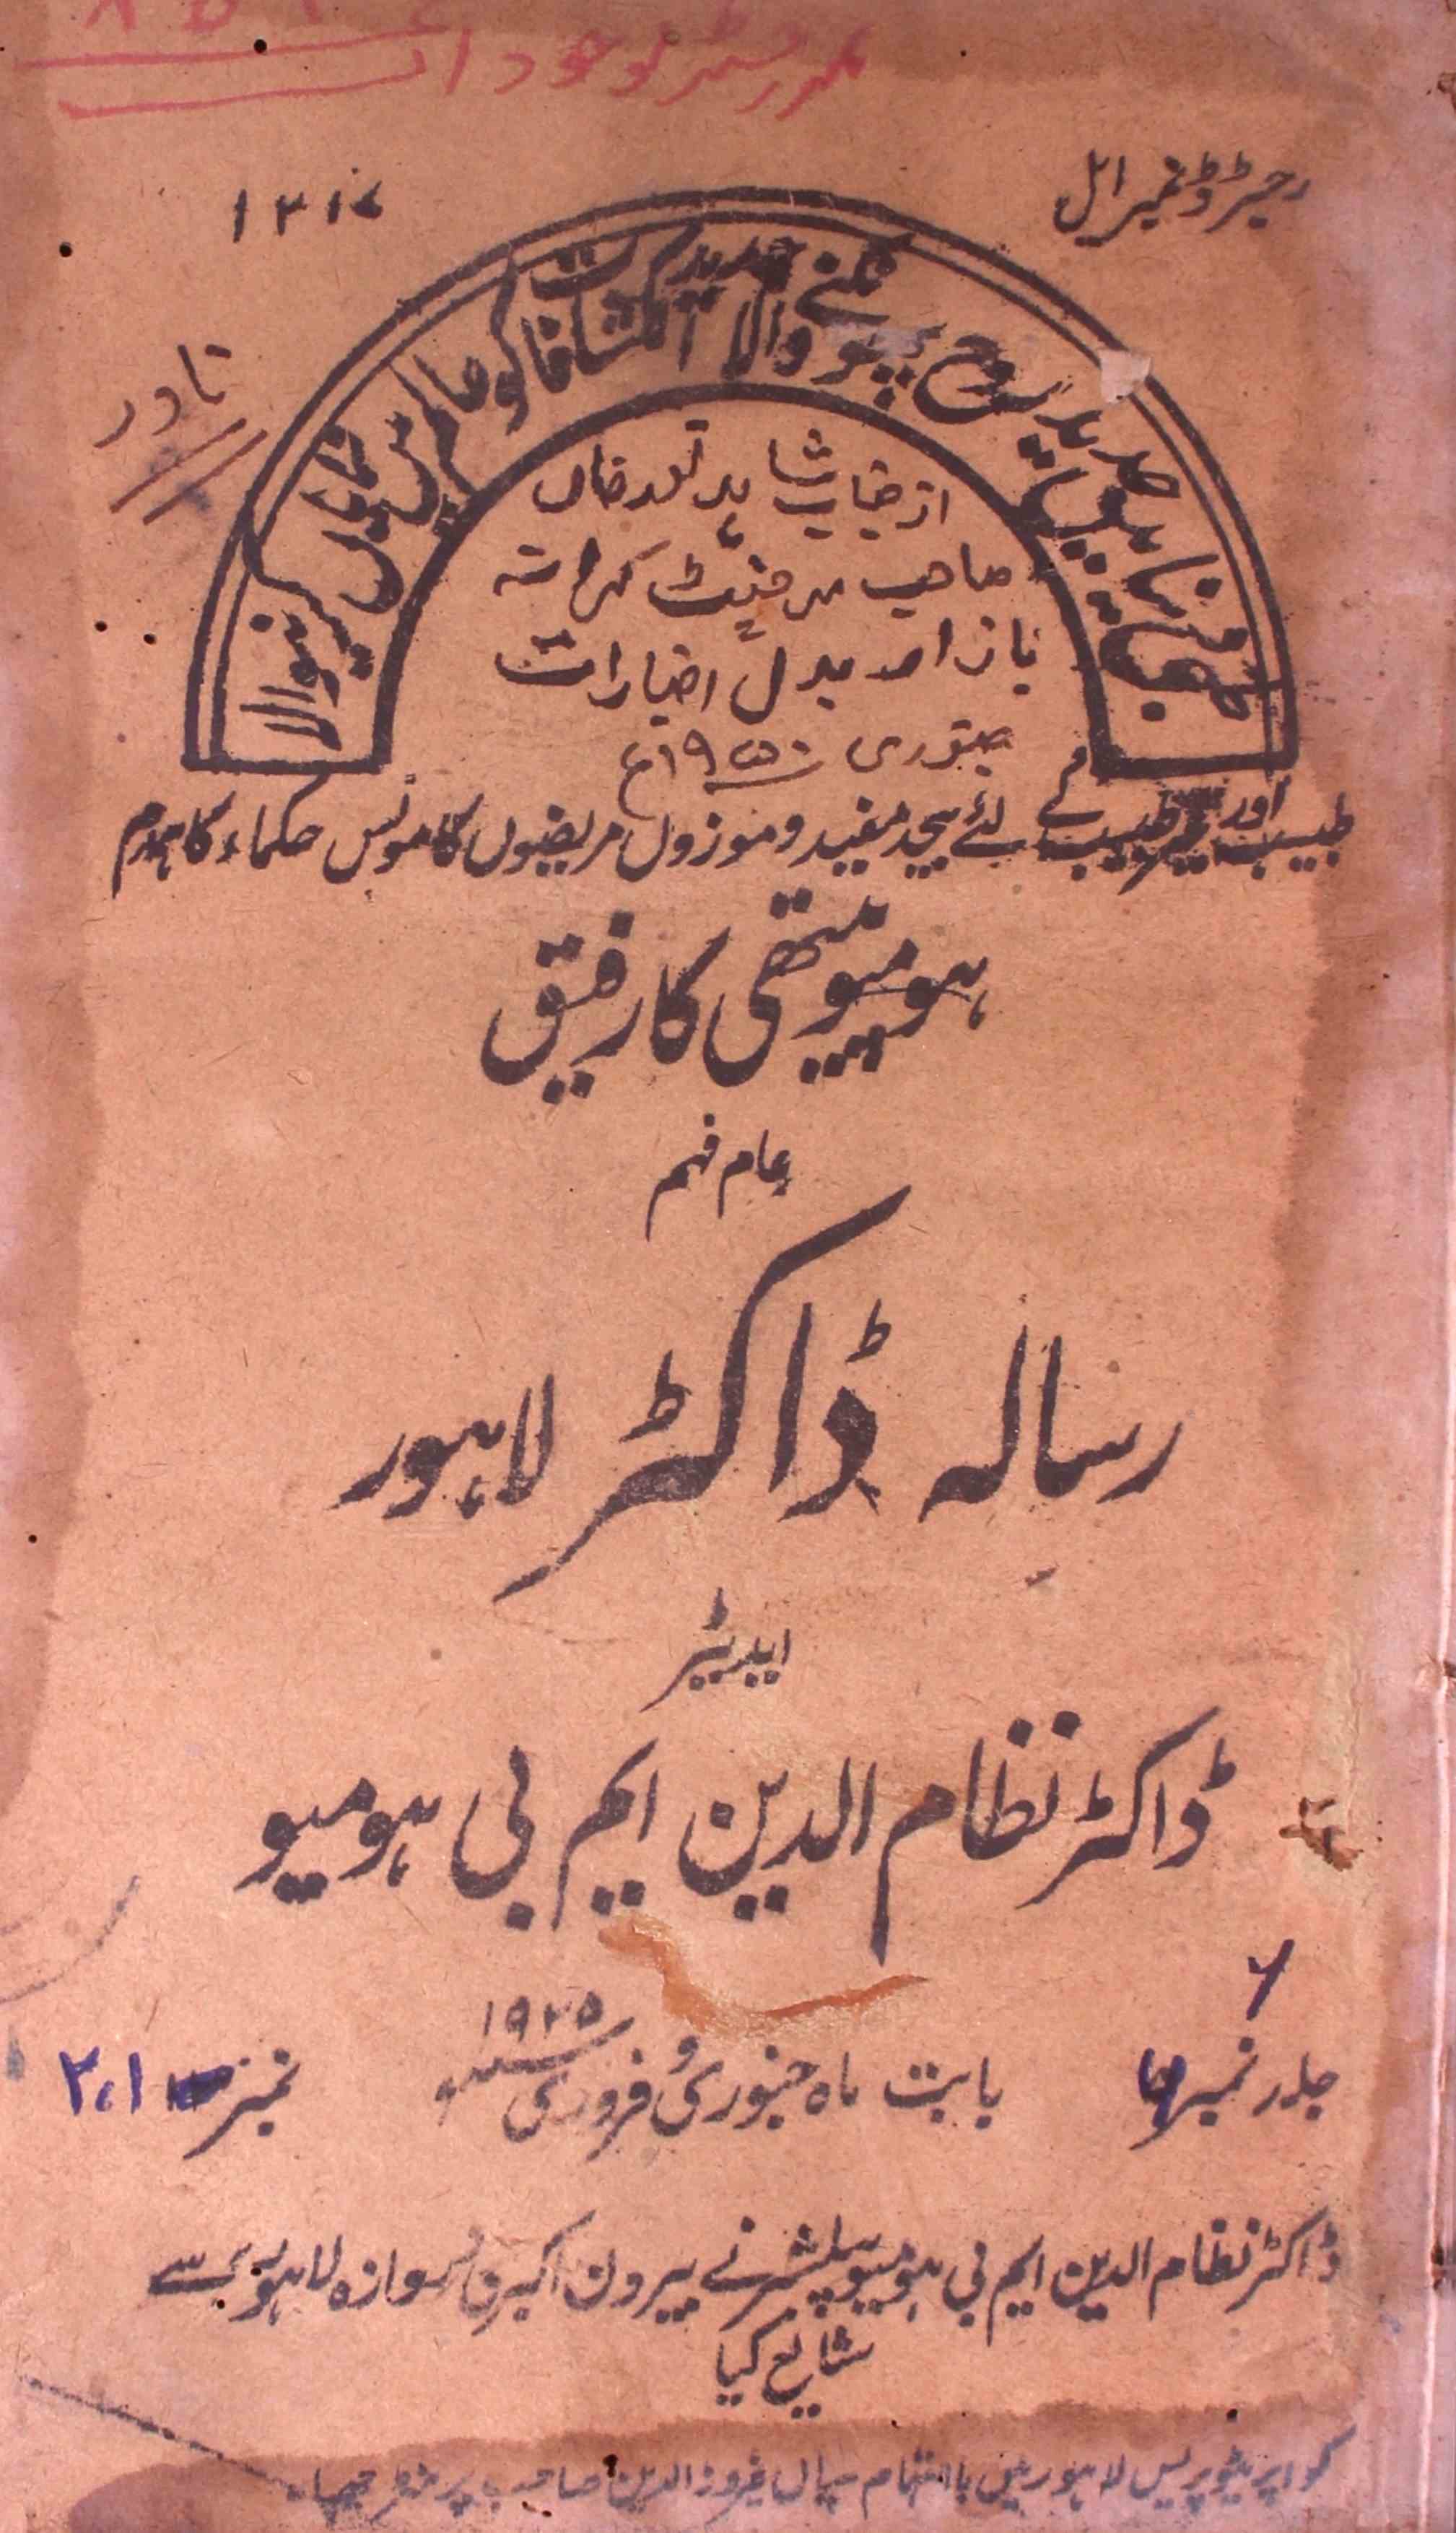 Doctor Lahore Jild 6 No.1,2 - Jan, Feb.1925